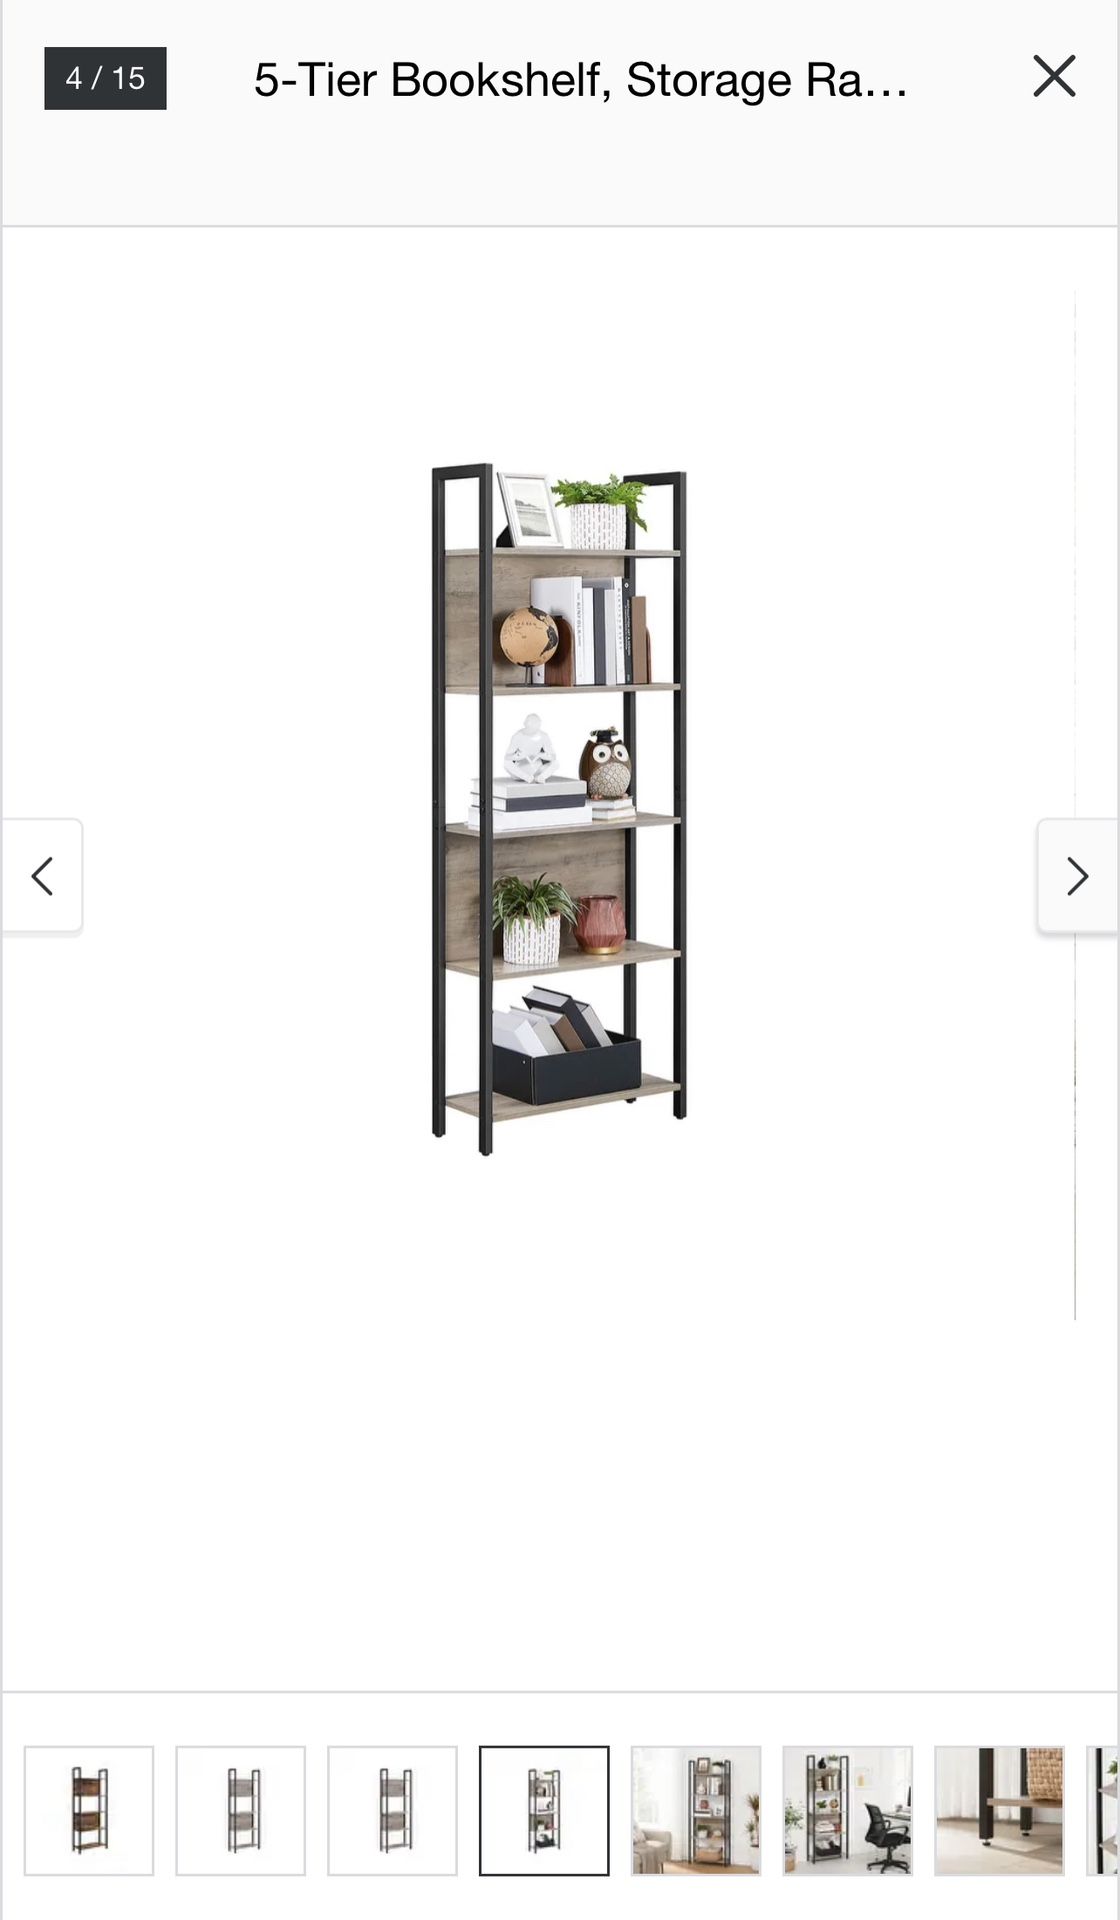 5-Tier Bookshelf, Storage Rack Shelf, Bookcase with 5 Shelves, Steel Frame $60